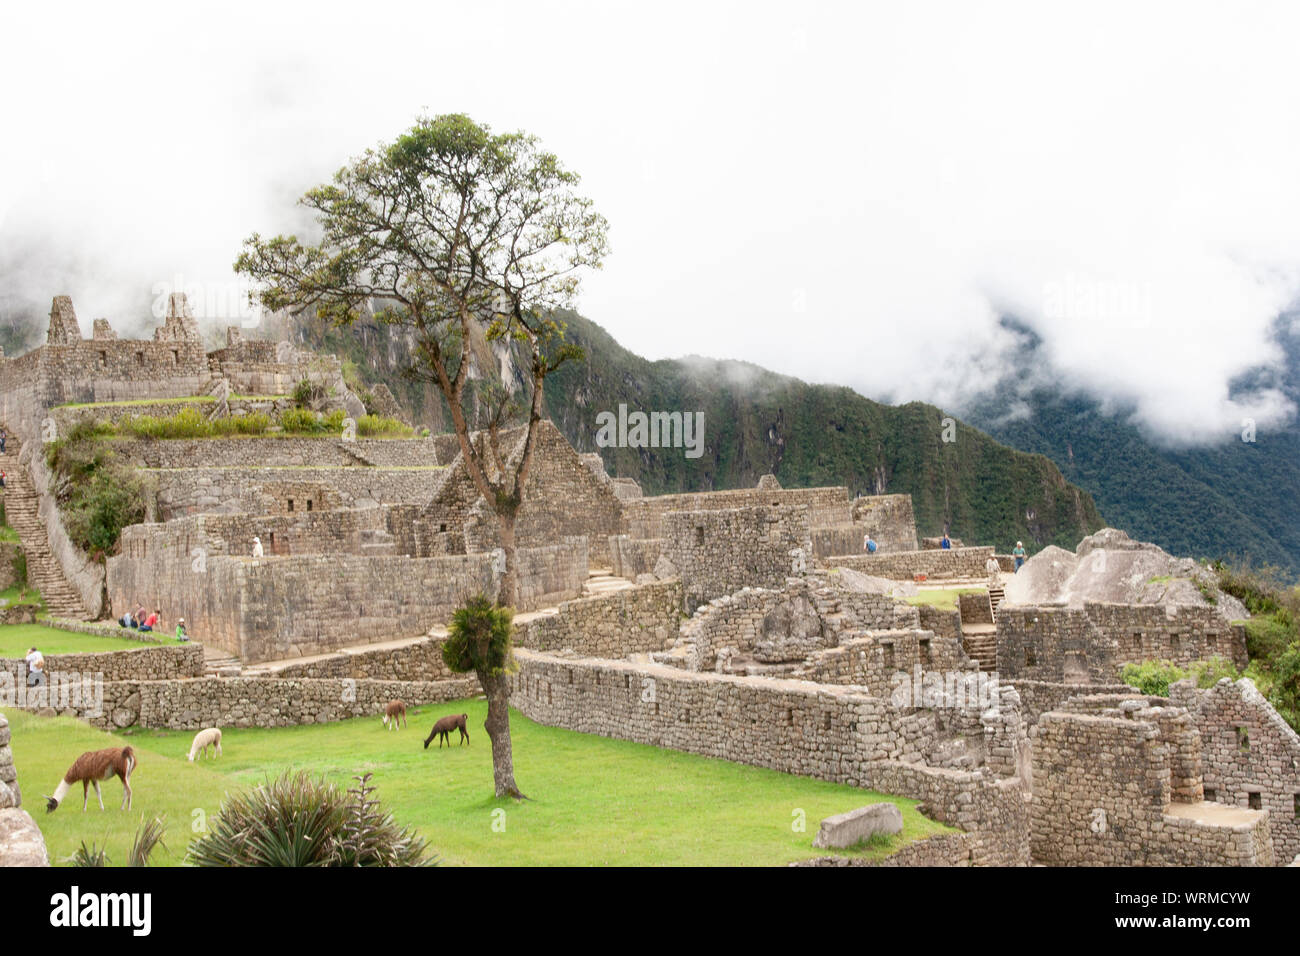 Machu Picchu ruins and Llamas grazing Stock Photo